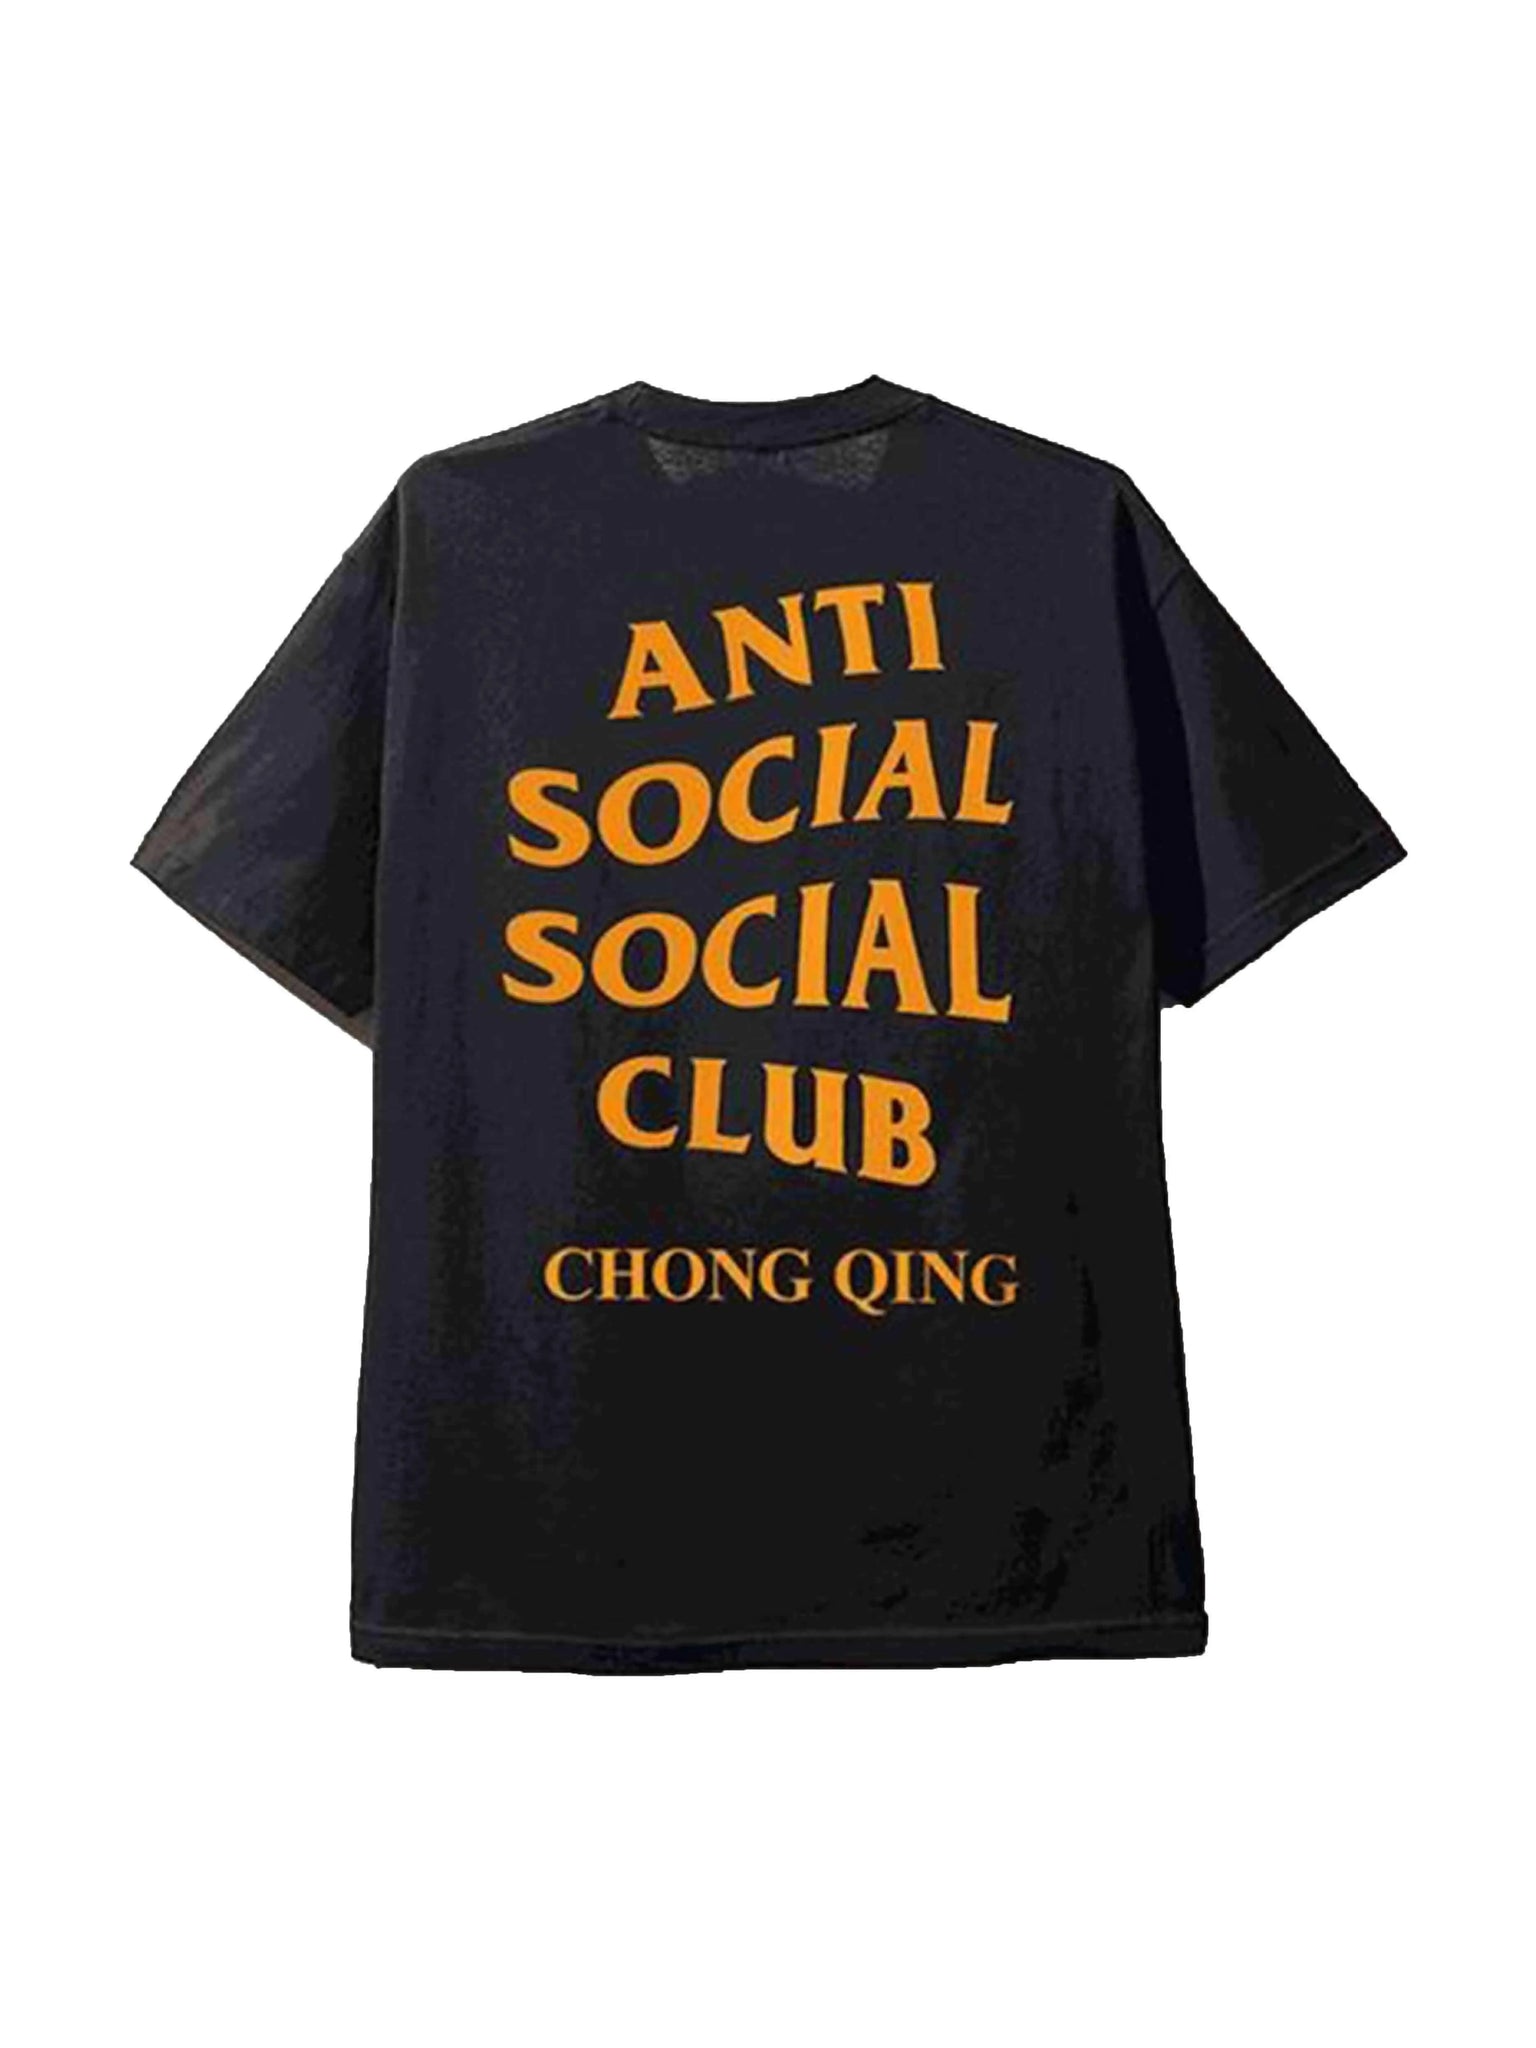 Anti Social Social Club Chong Qing Black Anti Social Social Club